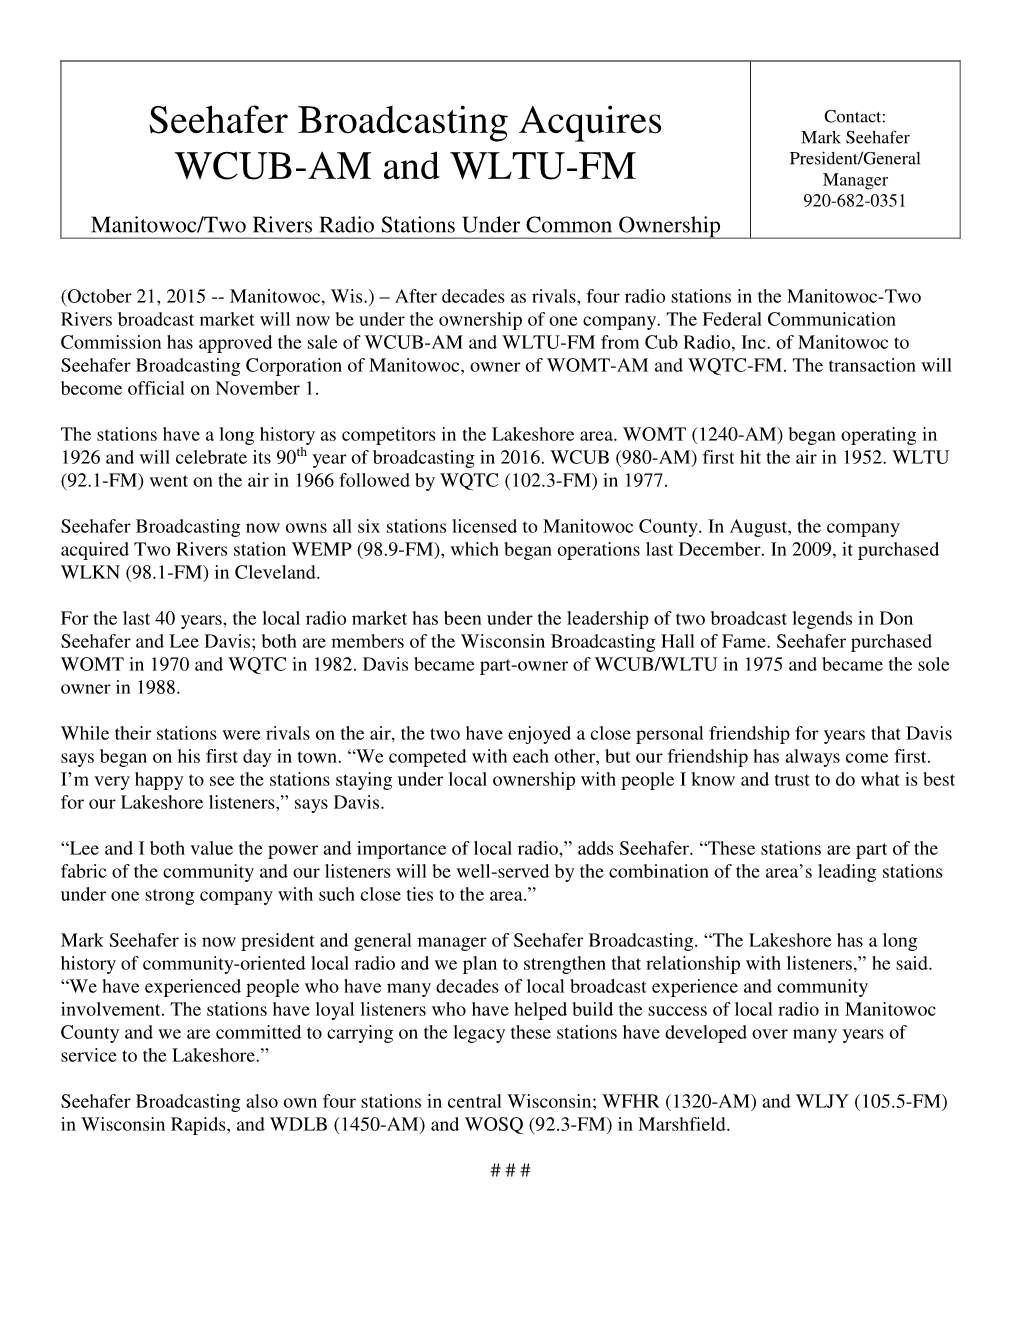 Seehafer Broadcasting Acquires WCUB-AM and WLTU-FM